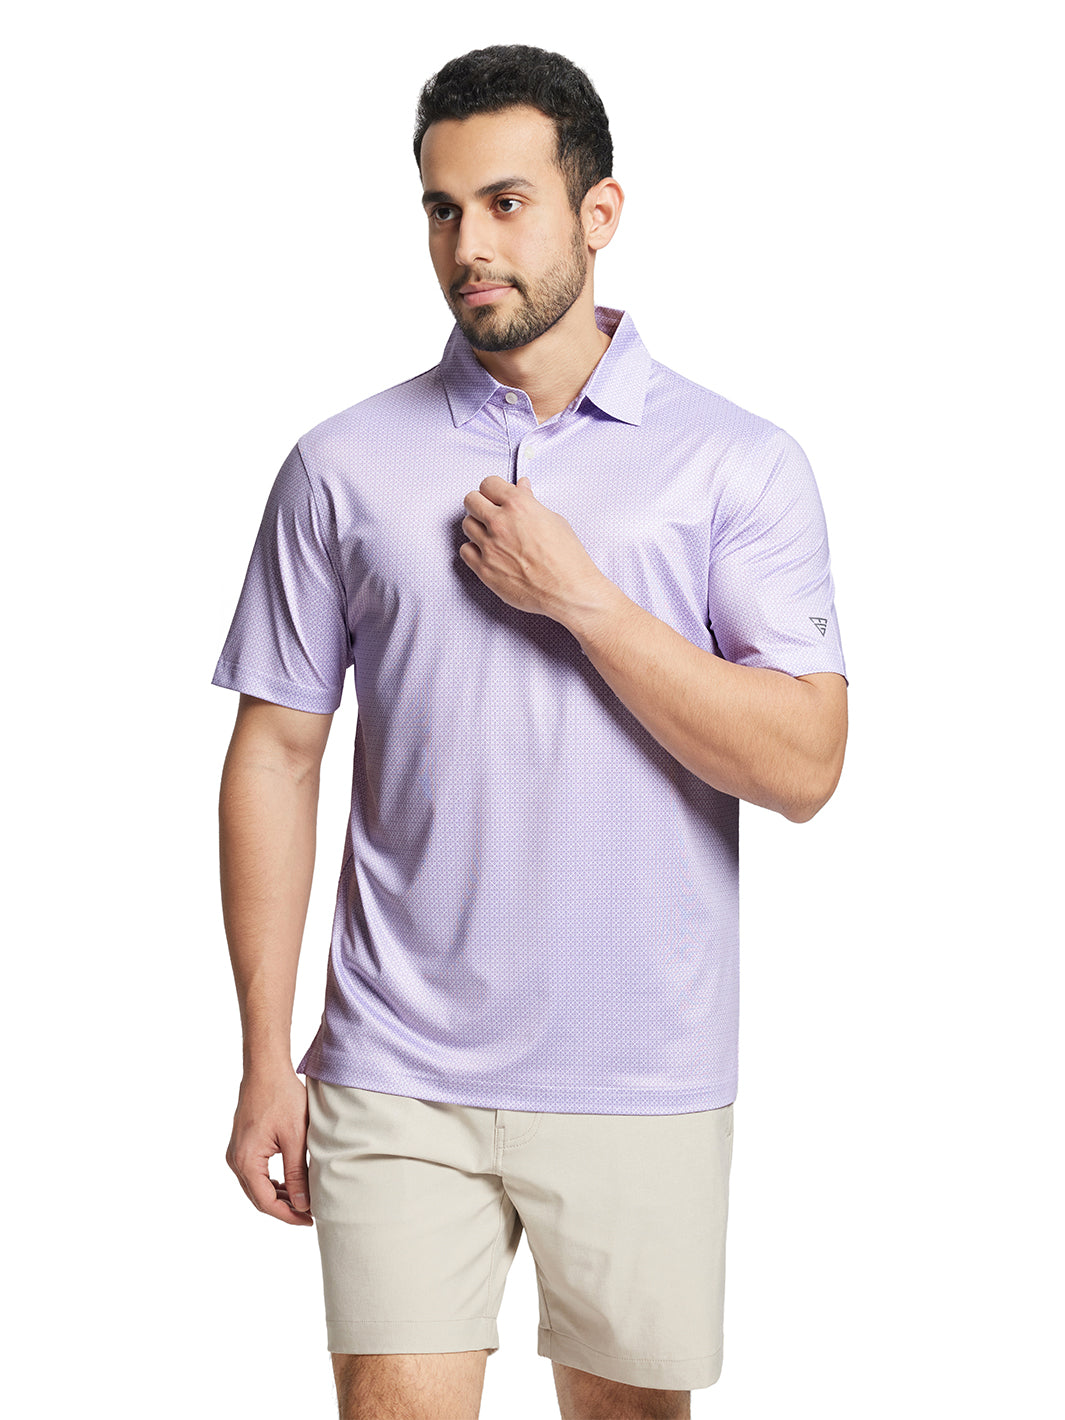 Men's Printed Golf Shirts-Lavender Button